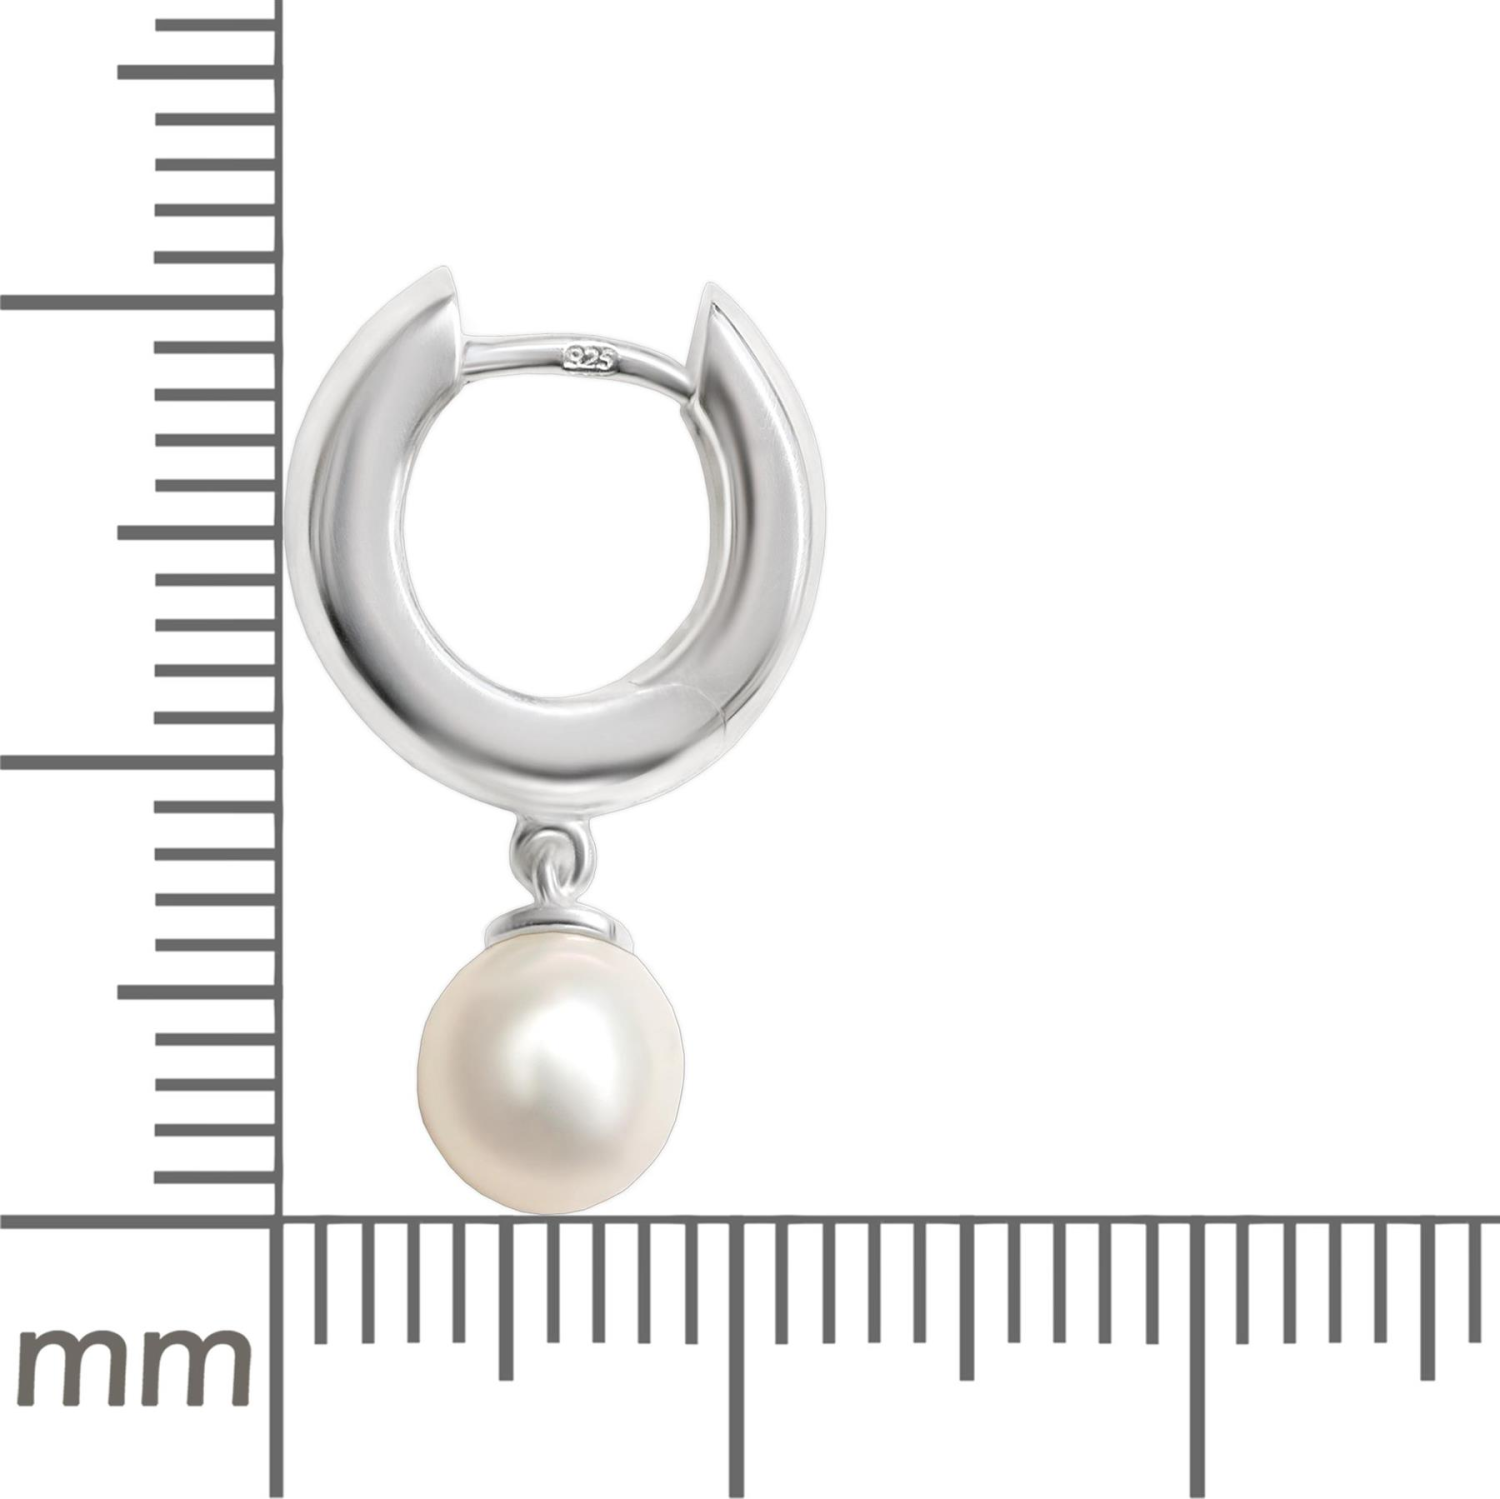 Silberne Creolen 21 x 12 mm mit hängender Perle matt schimmernd 925 Sterling Silber